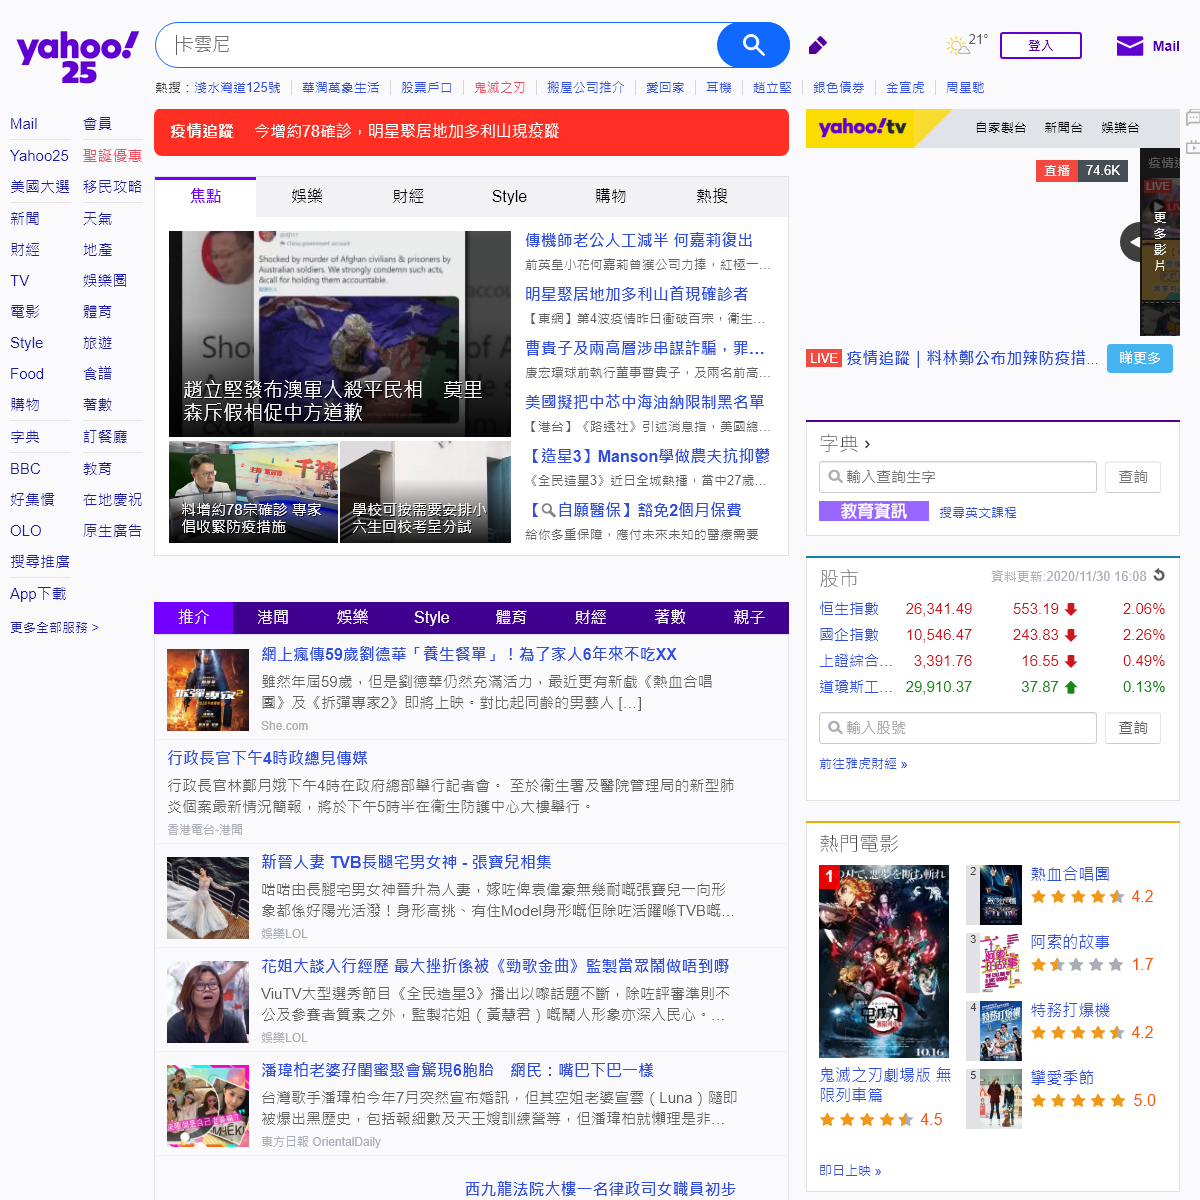 A complete backup of yahoo.com.hk